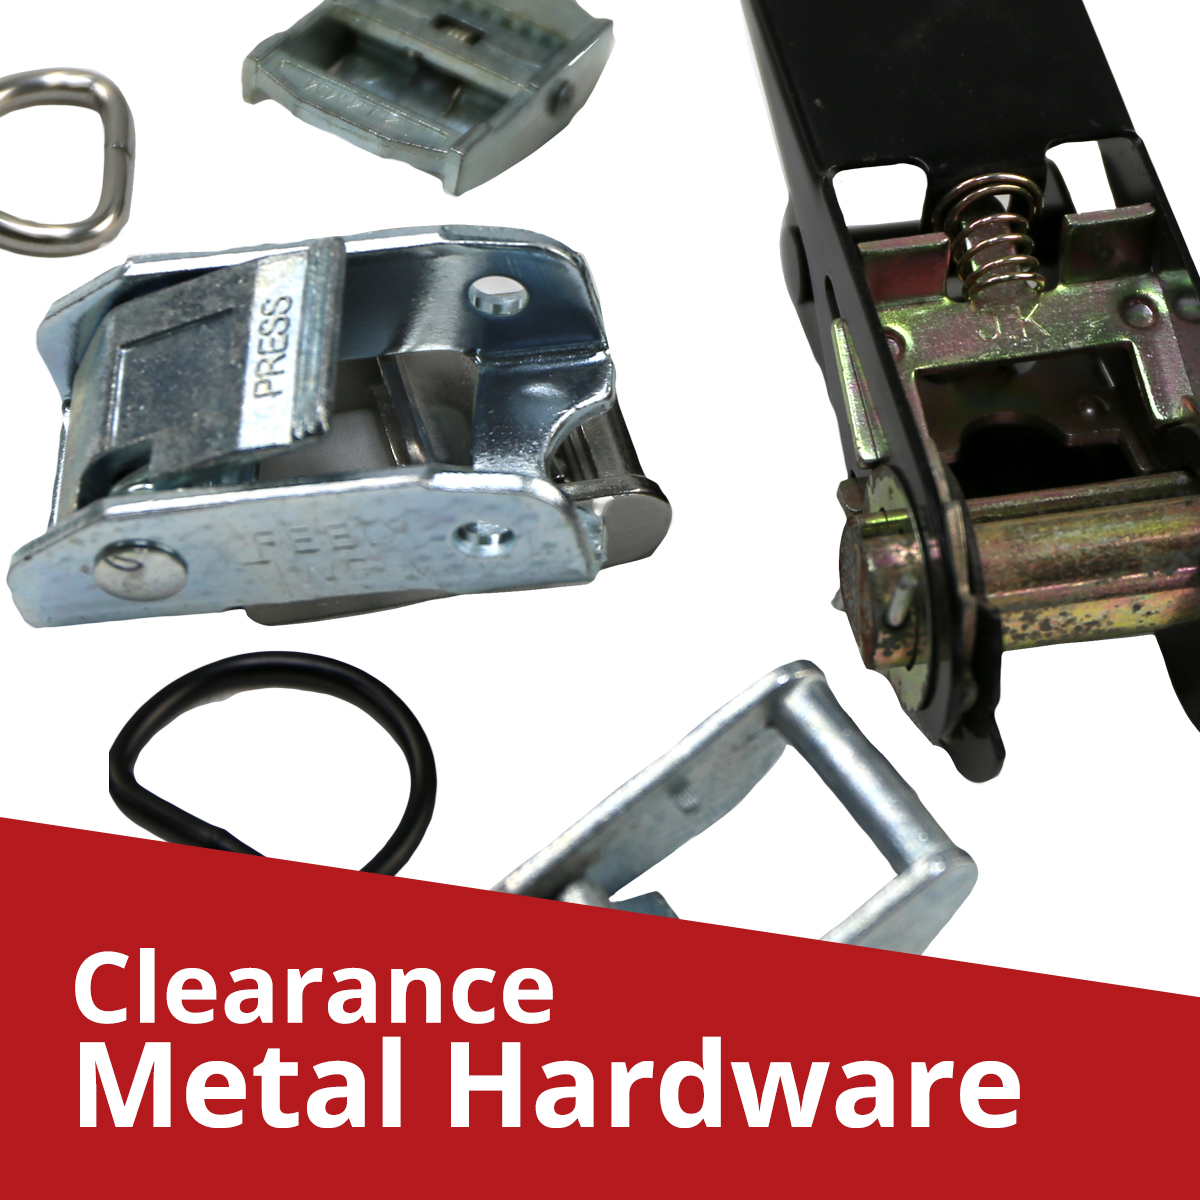 Clearance Metal Hardware